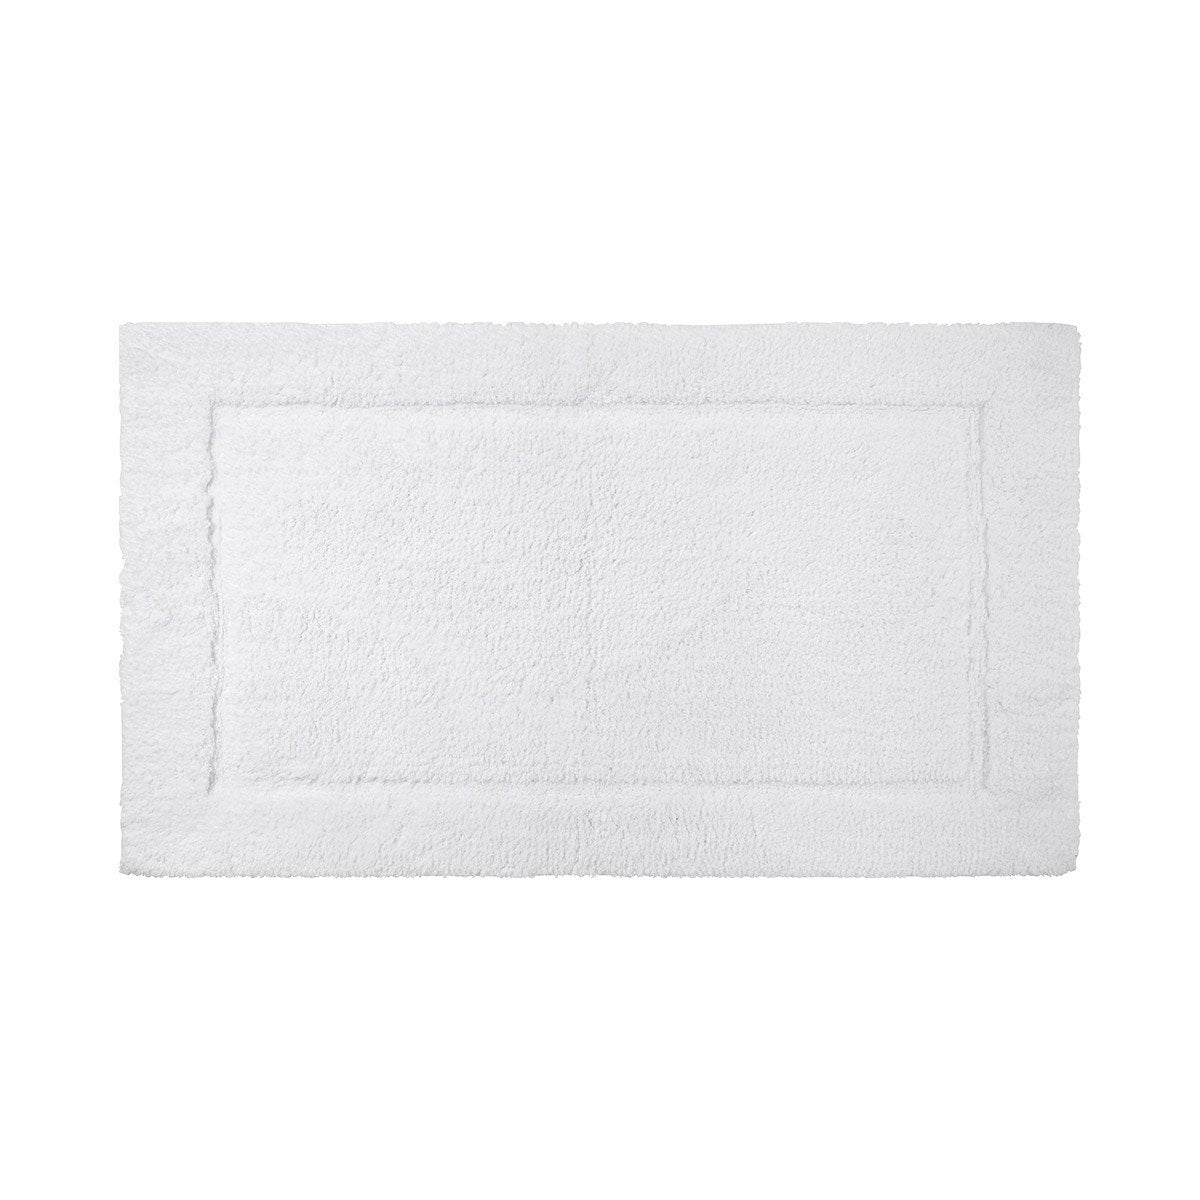 Prestige Blanc Bath Rug by Yves Delorme | Fig Linens - White square bath rug, mat, non slip, cotton